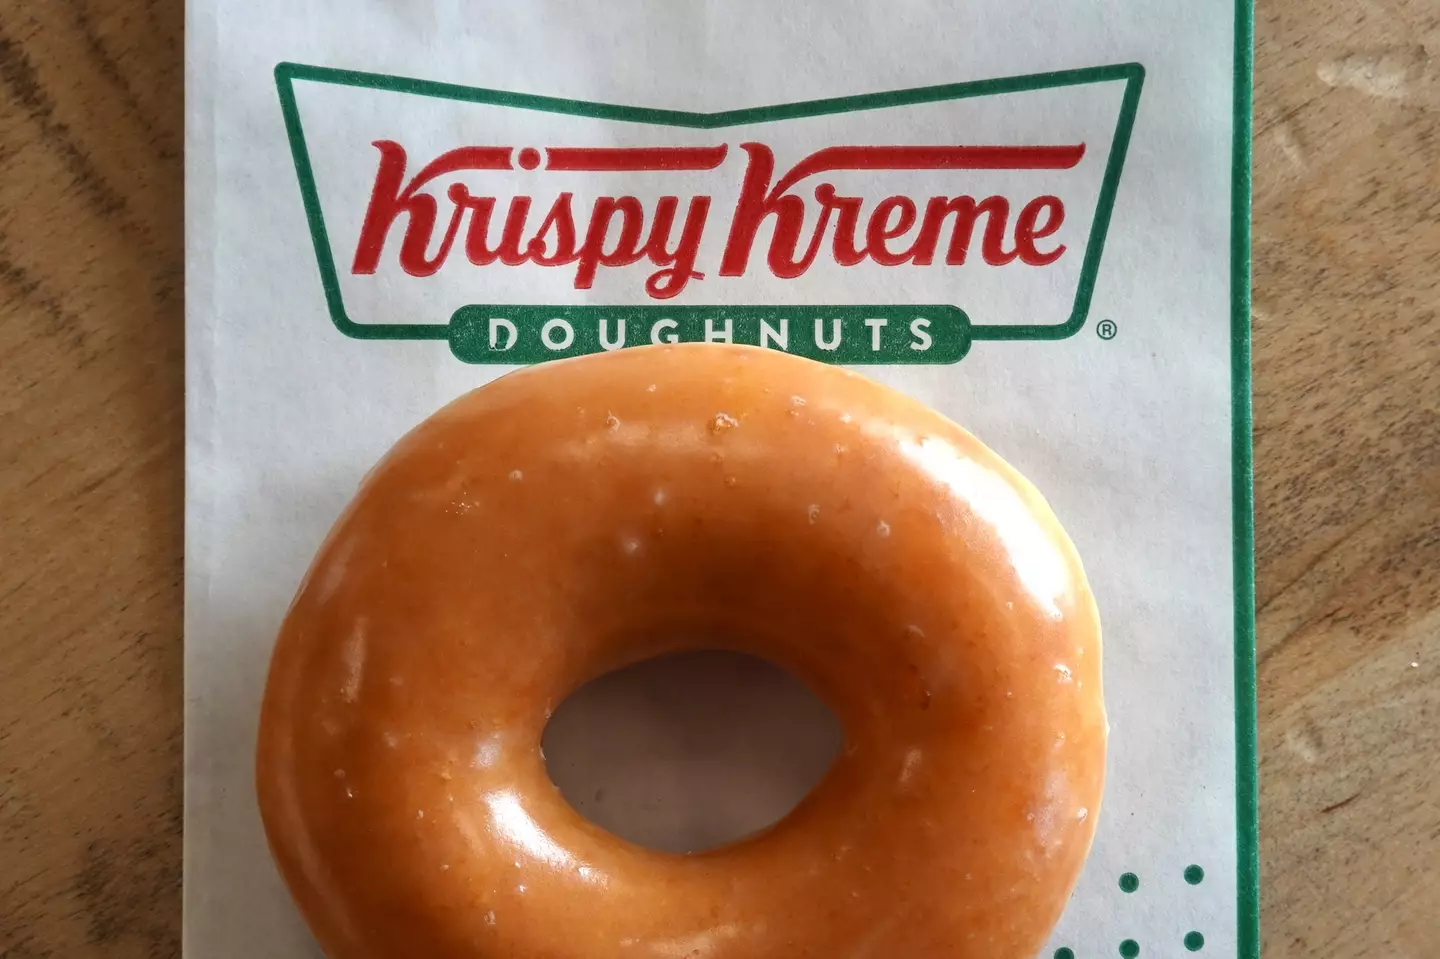 A dozen free doughnuts sounds even better than one free doughnut.